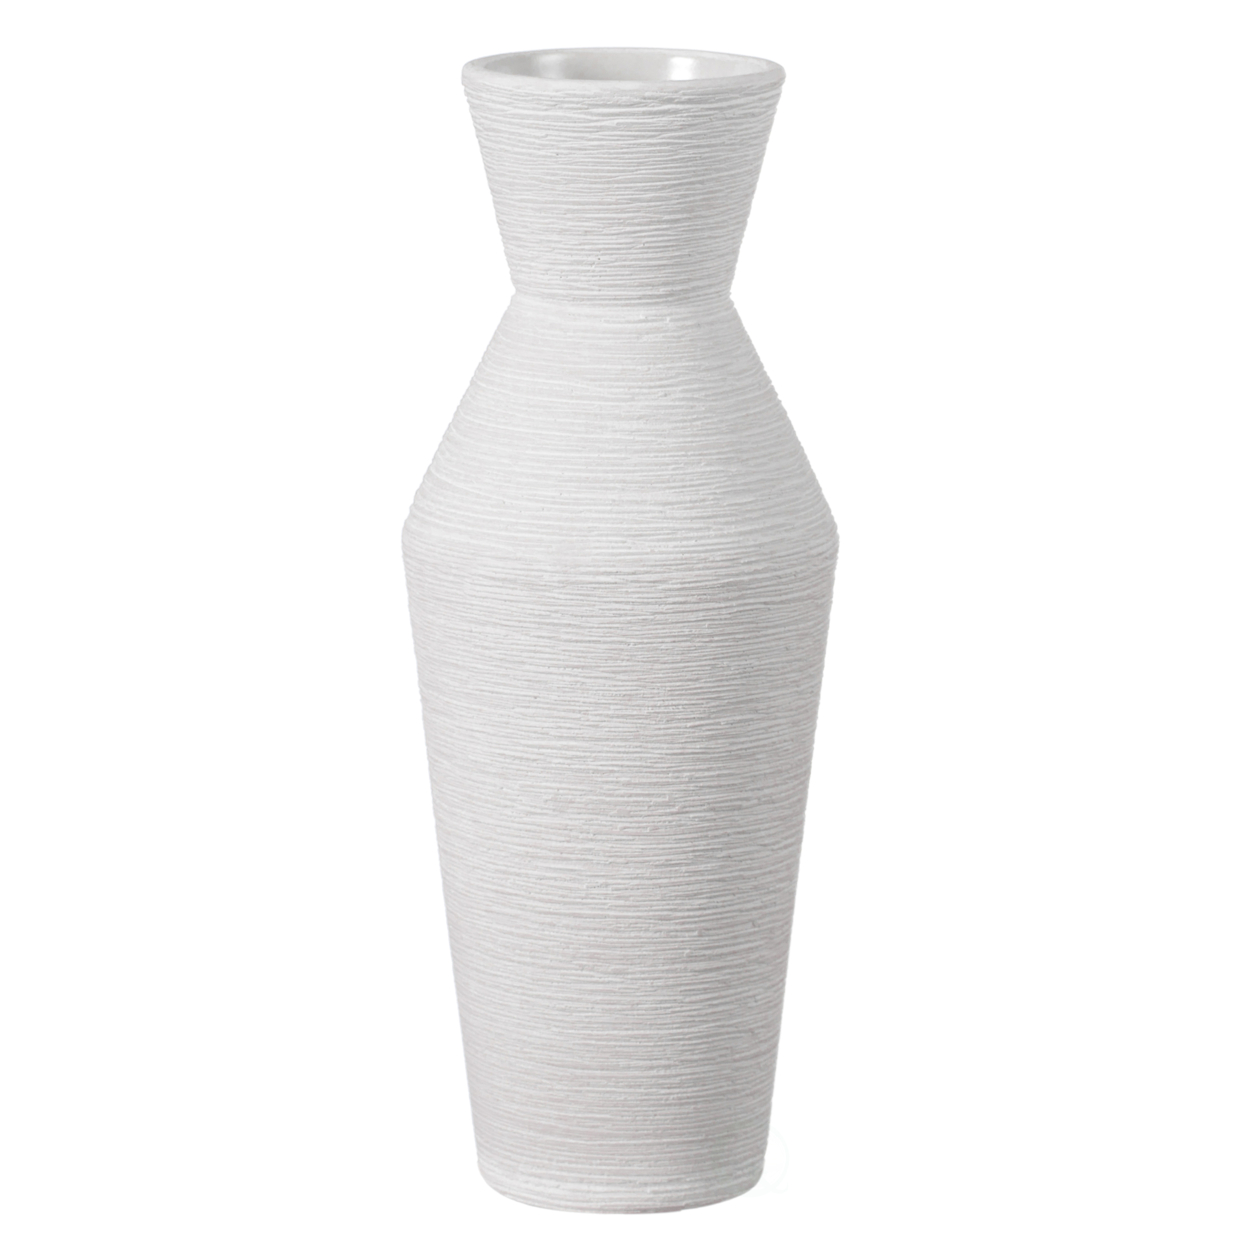 Decorative Ceramic Round Sharp Concaved Top Vase Centerpiece Table Vase - White